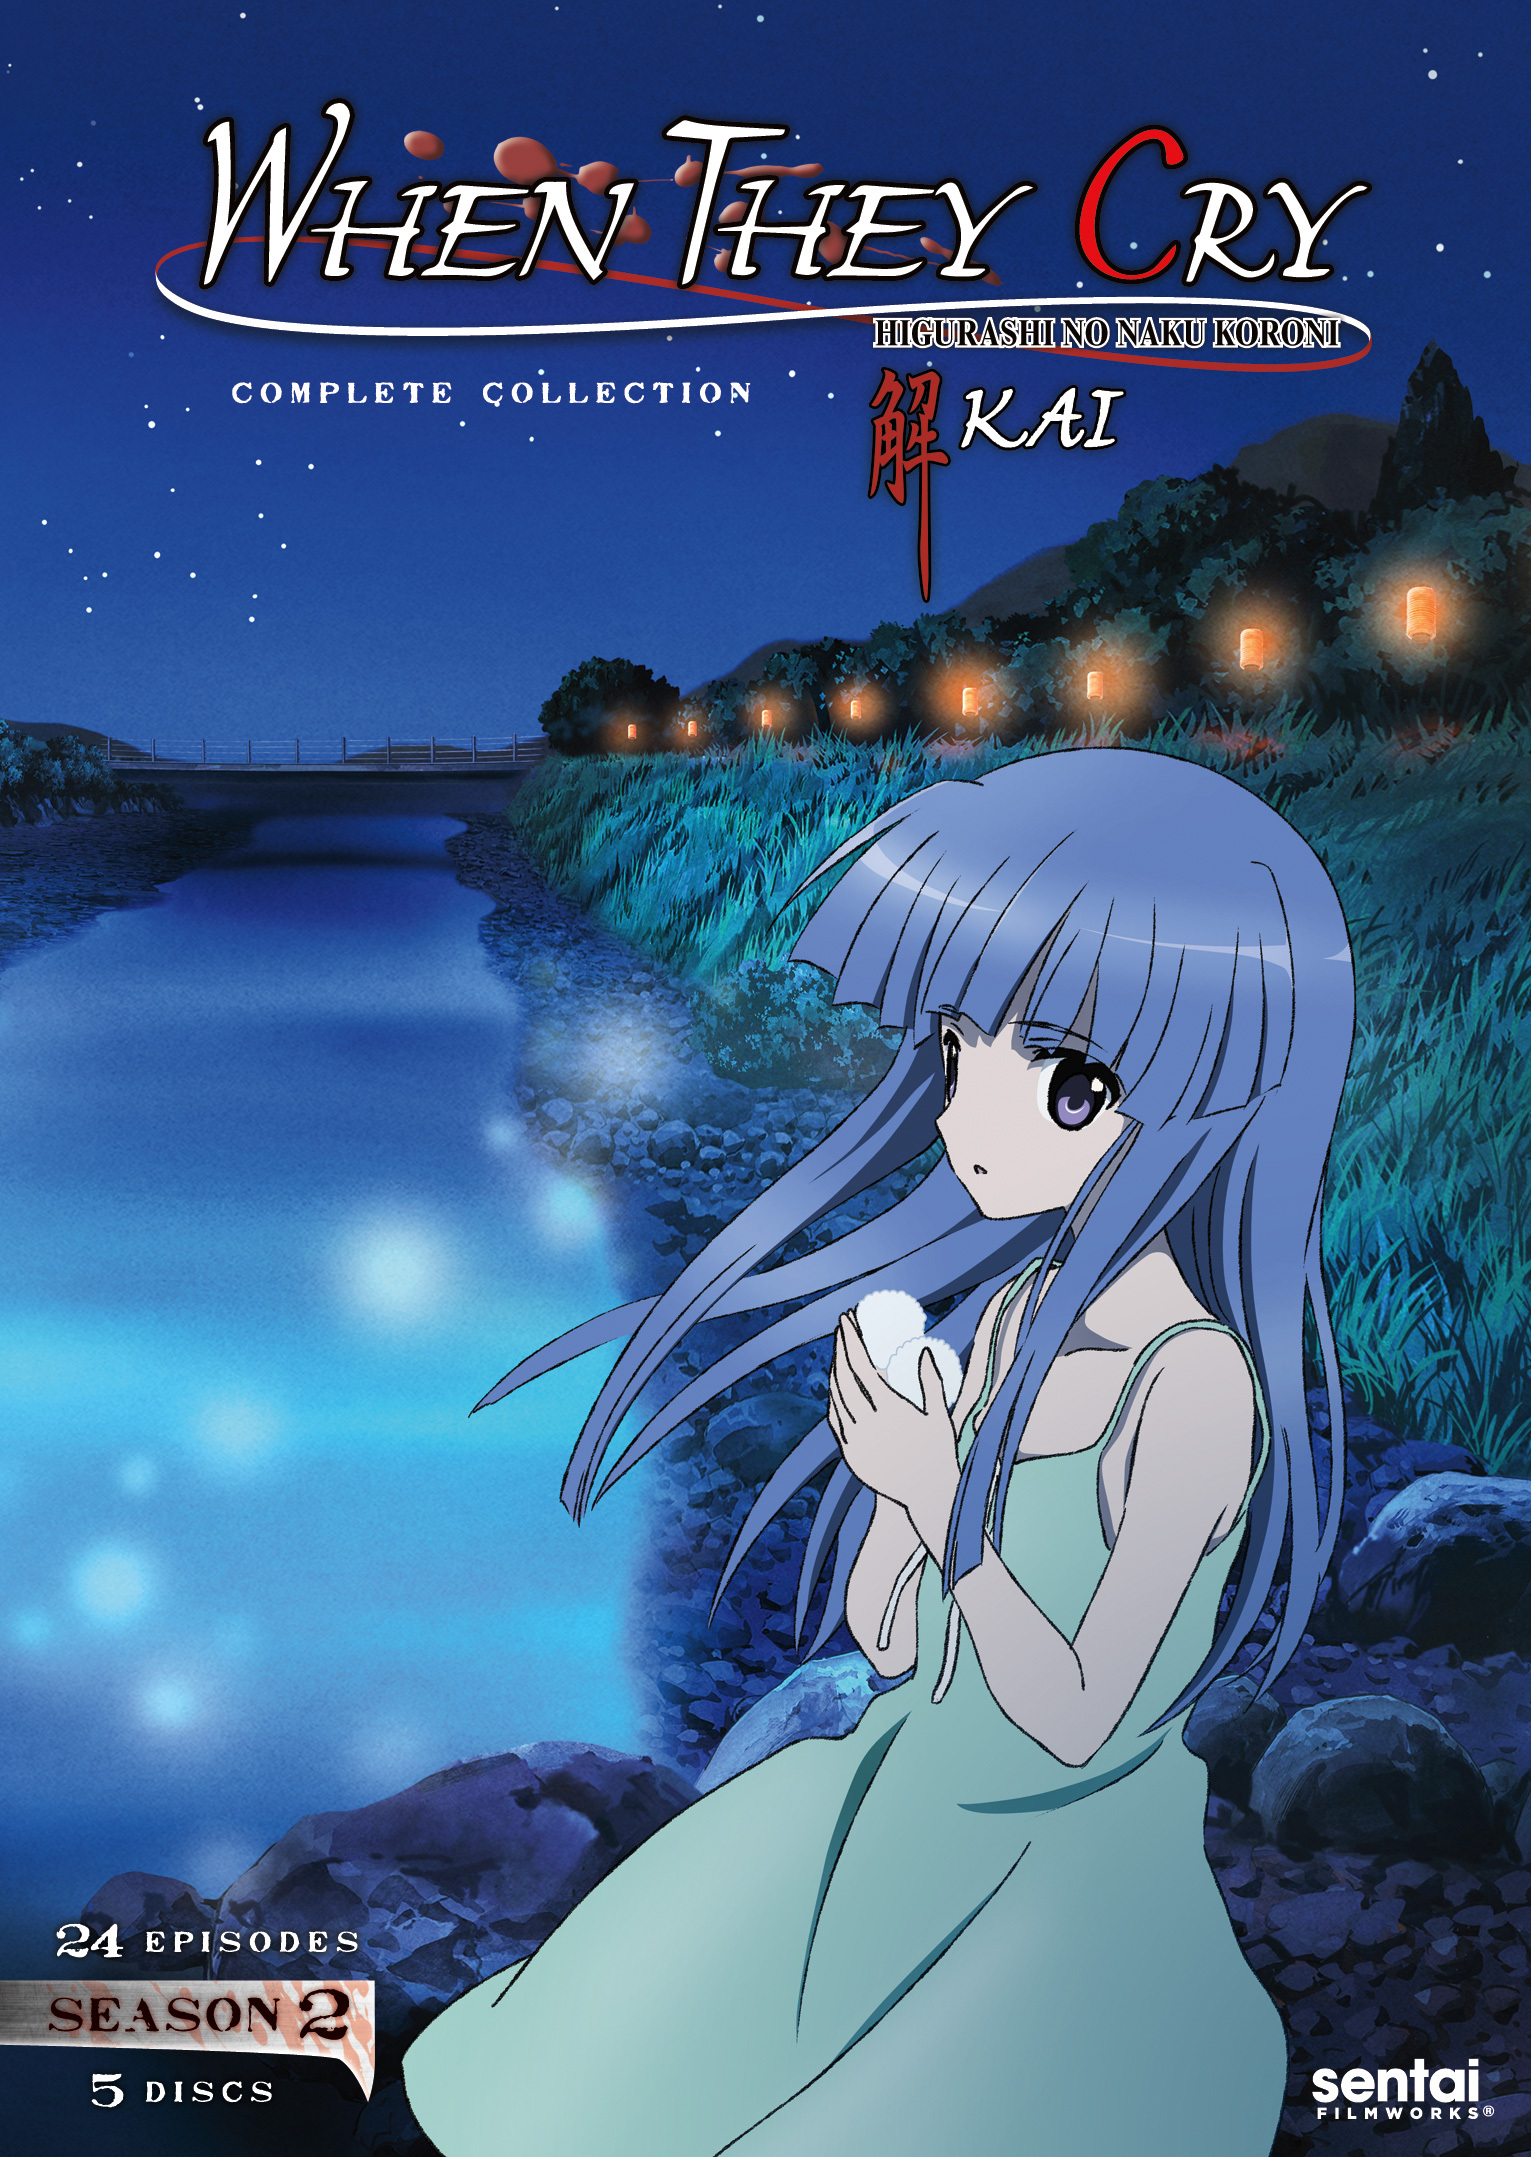 Ergo Proxy 3-DVD Lot Anime Series Volumes 1 2 3 Episodes 1-12 Geneon